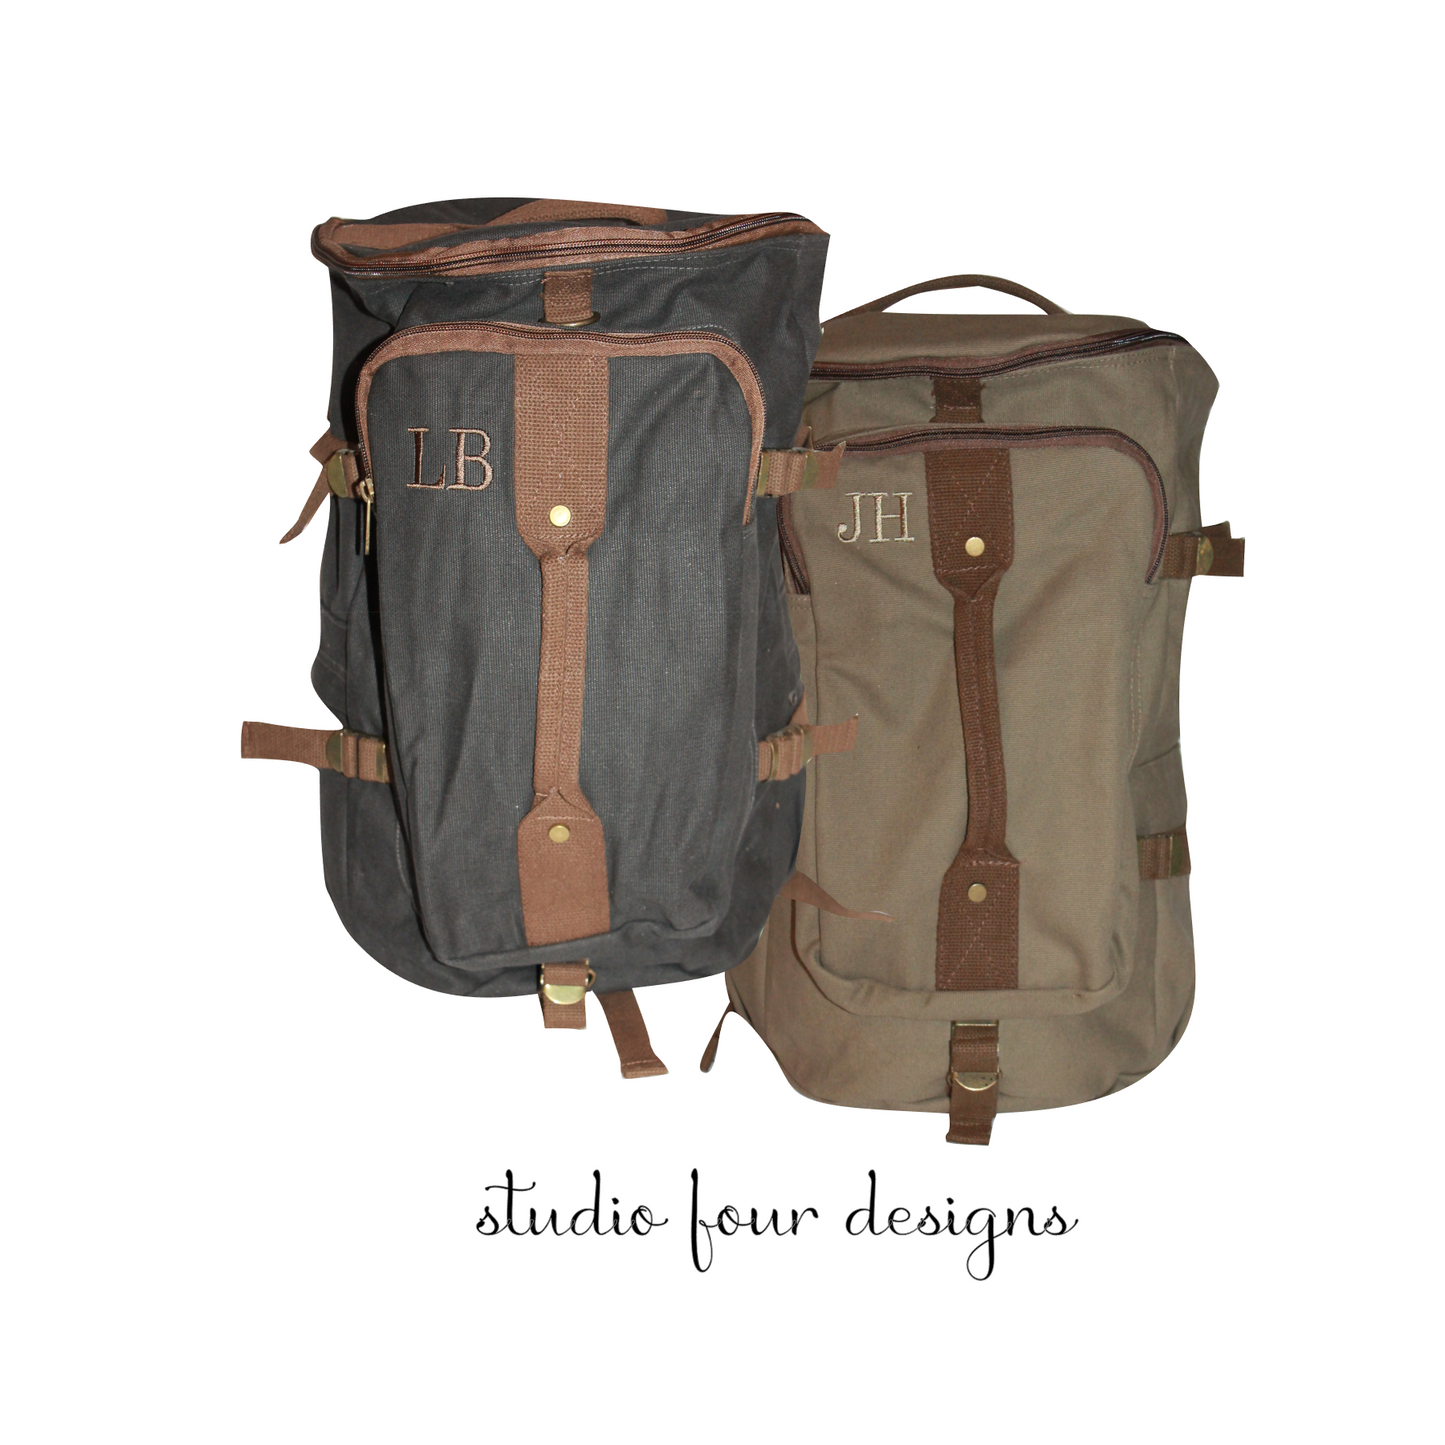 Monogrammed Convertable Duffel Bag Backpack